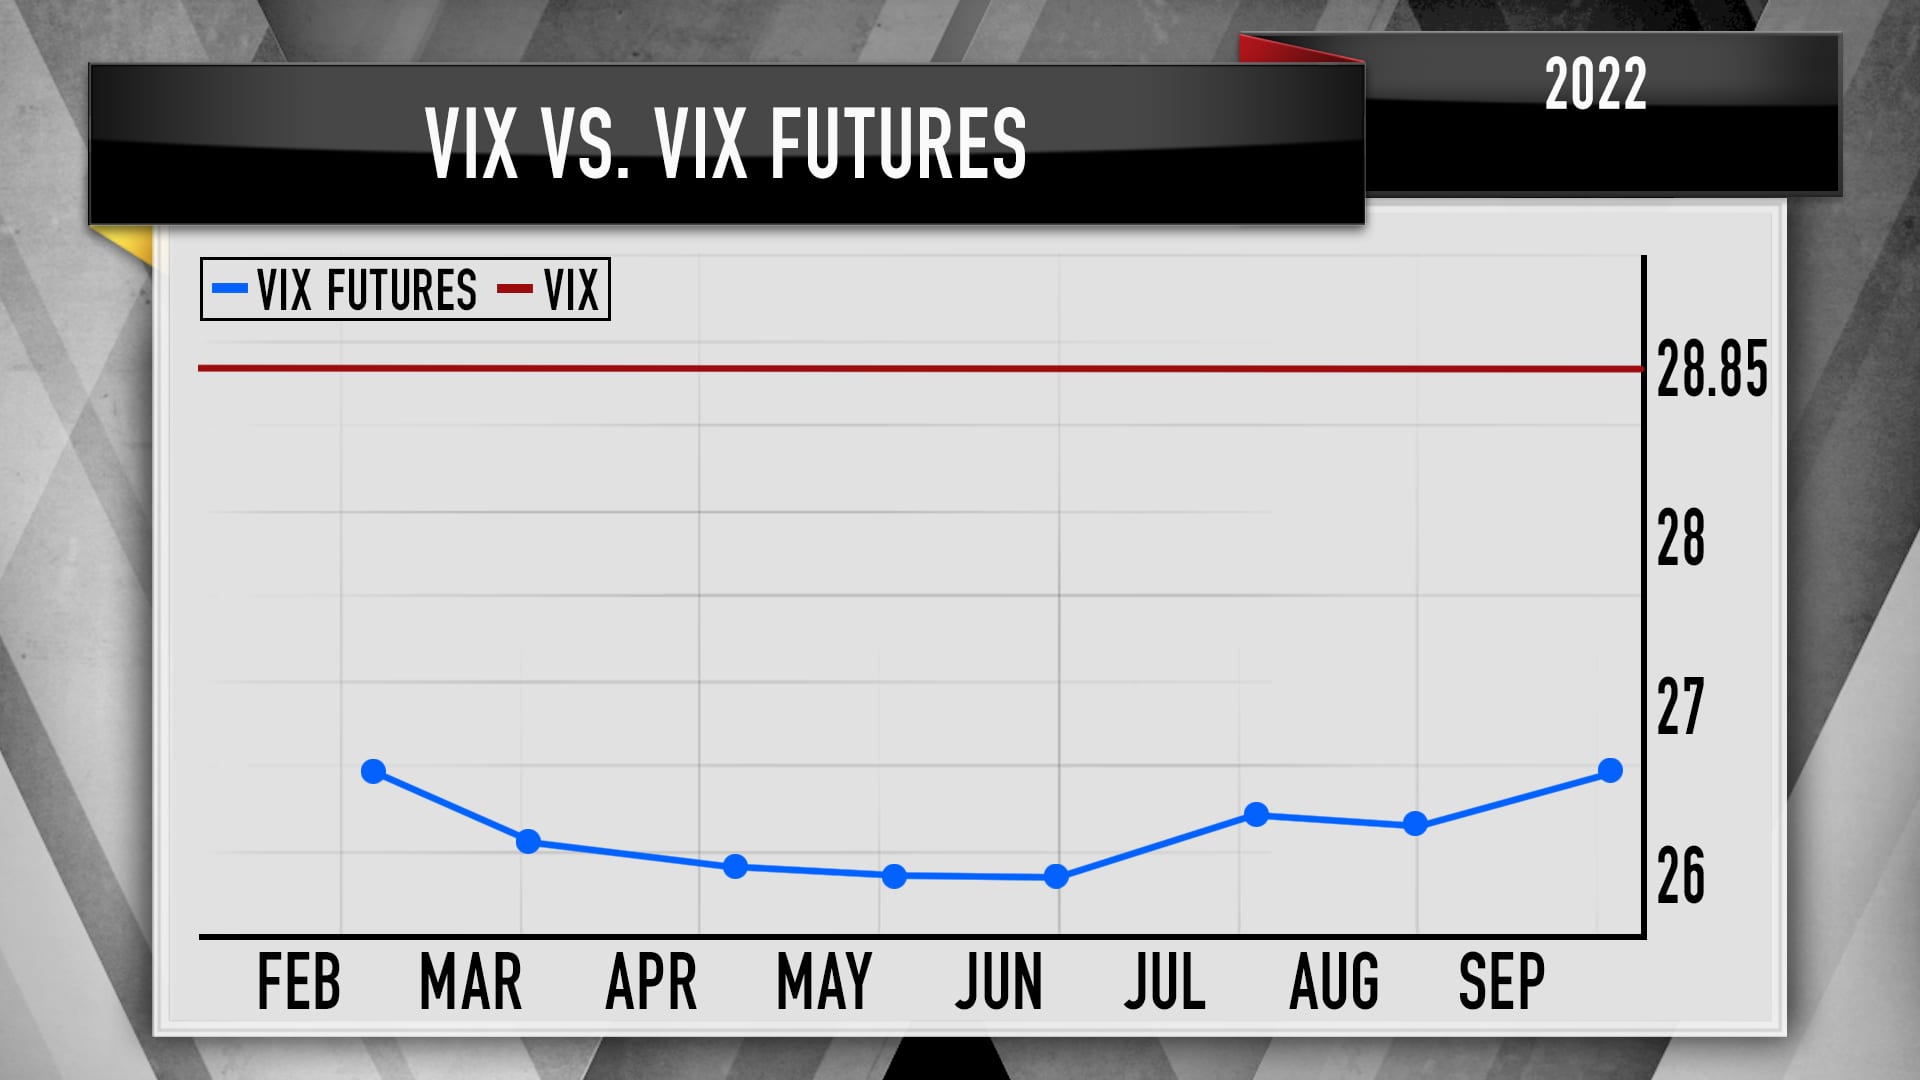 VIX futures looking forward in 2022. 